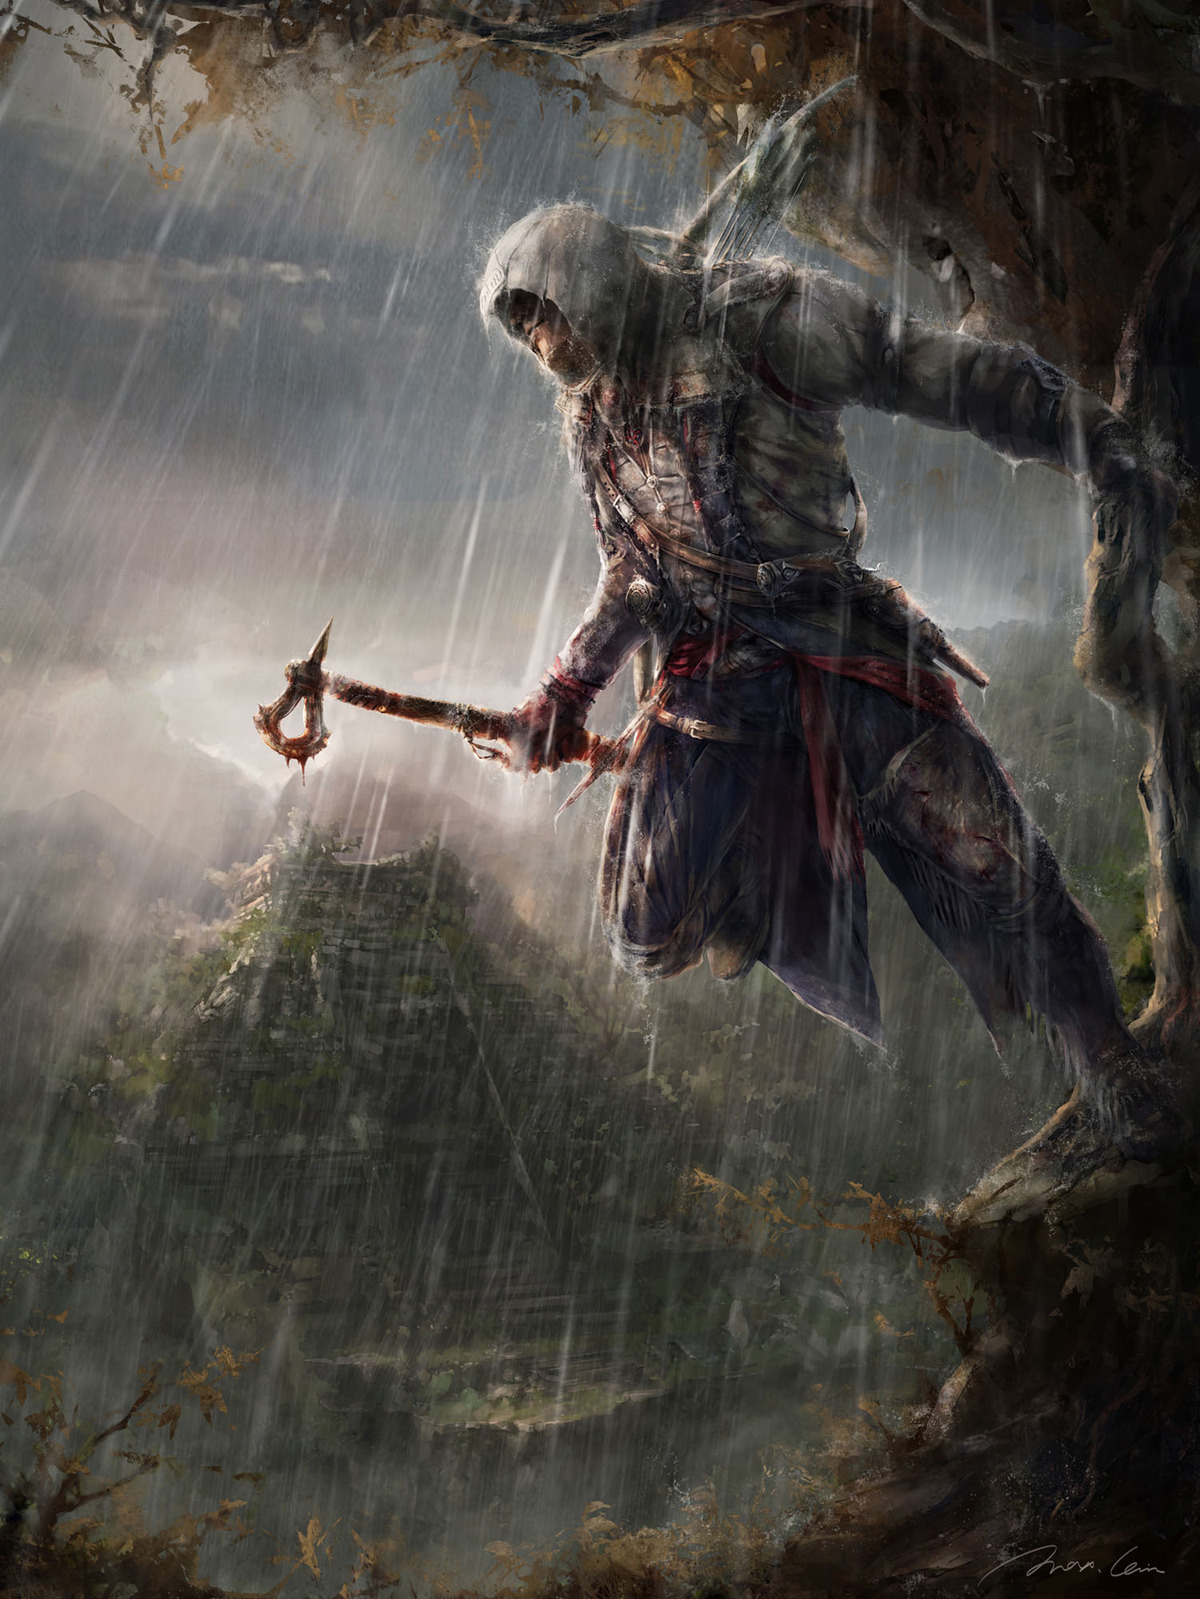 Assassins Creed: Connor  Assassins creed art, Assassins creed, Assassins  creed 3